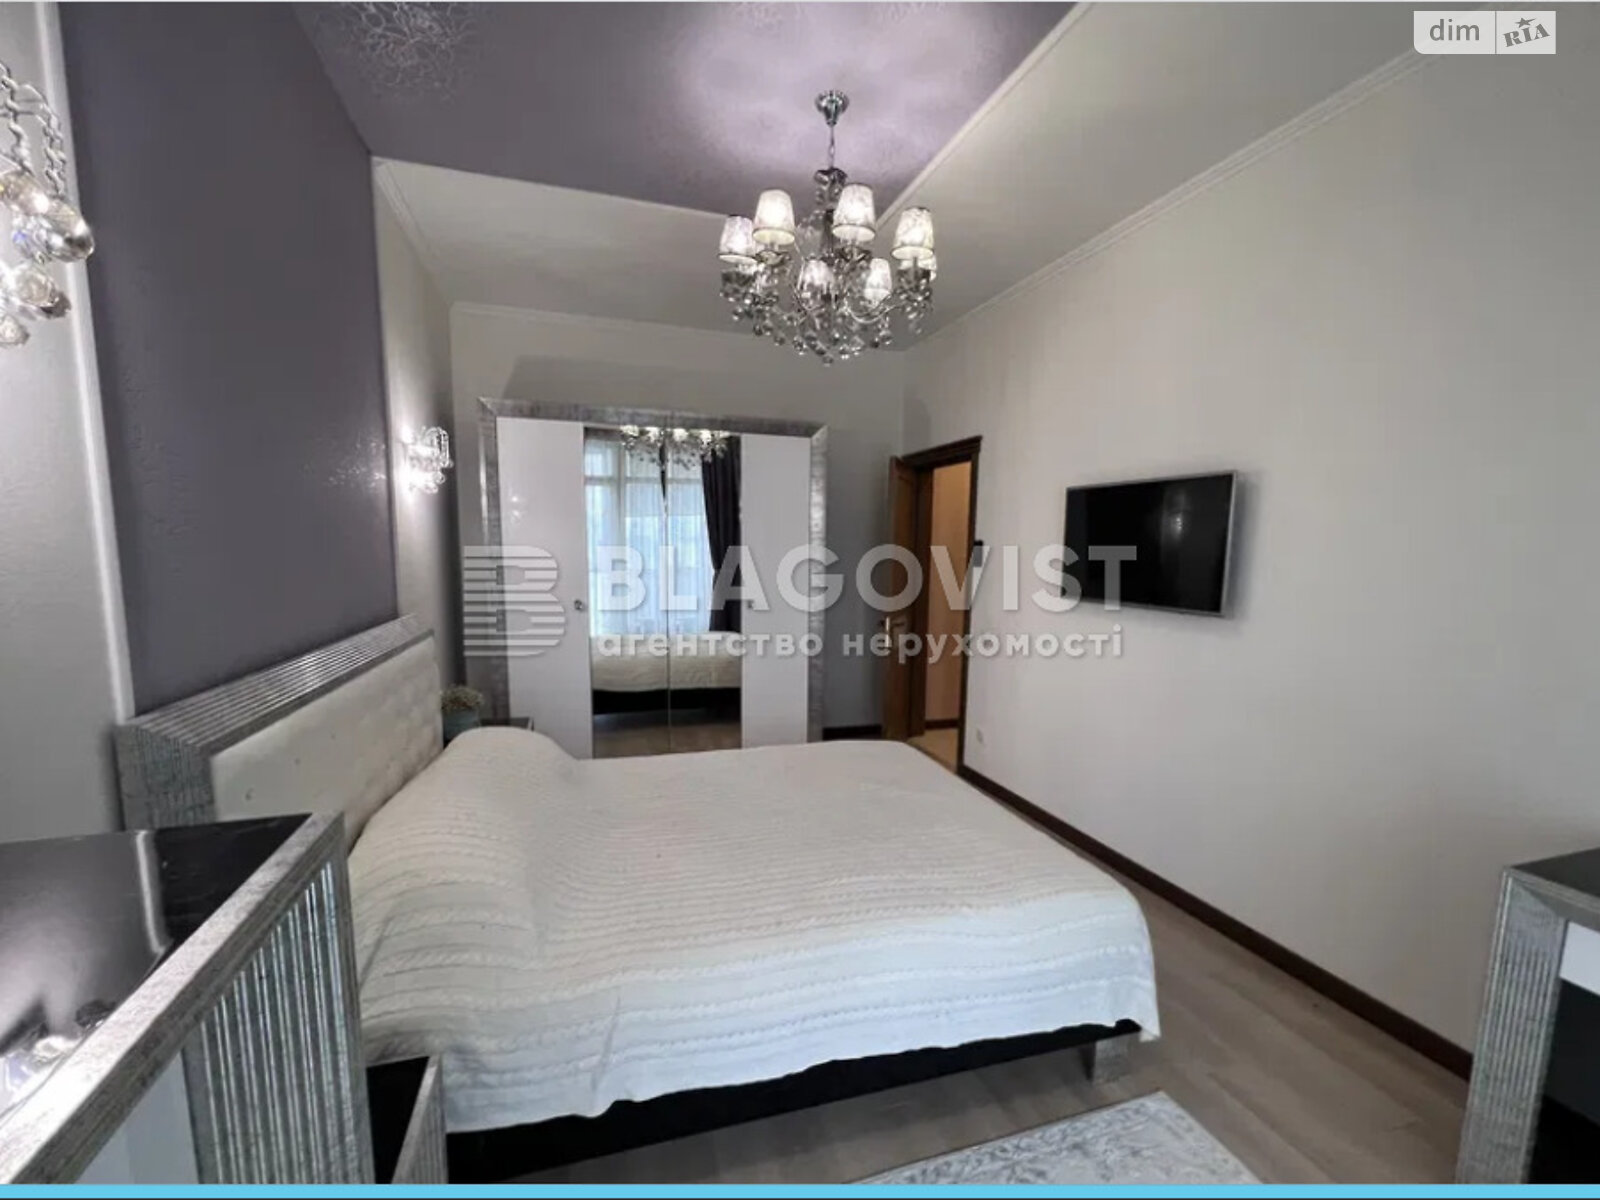 Продаж двокімнатної квартири в Києві, на наб. Оболонська 1, фото 1